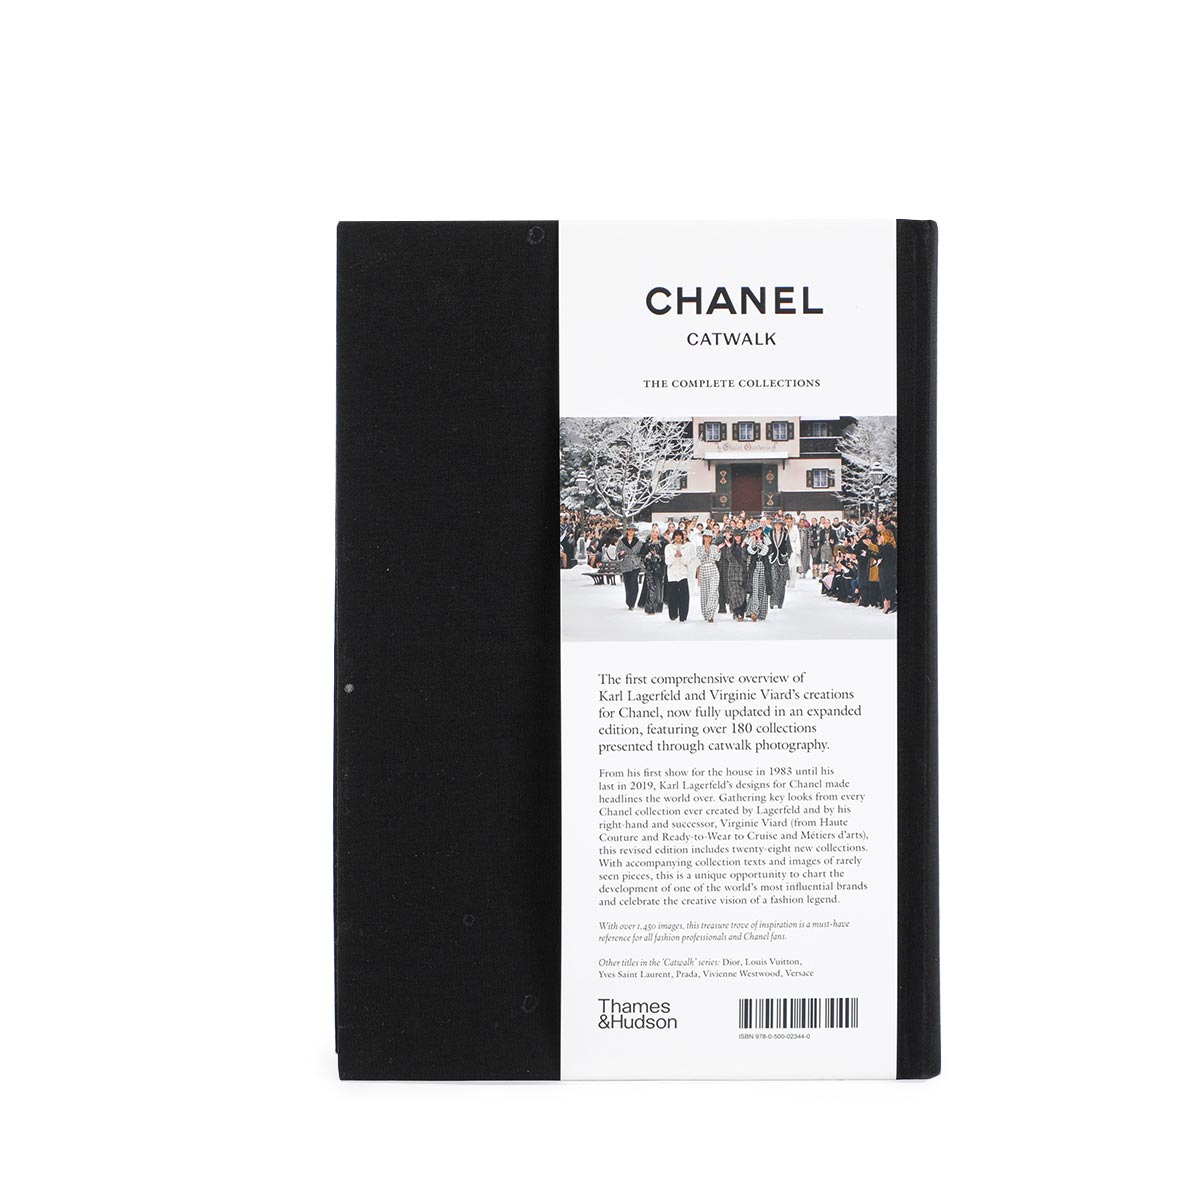 Catwalk: Chanel, Dior, Louis Vuitton, Prada and Yves Saint Laurent